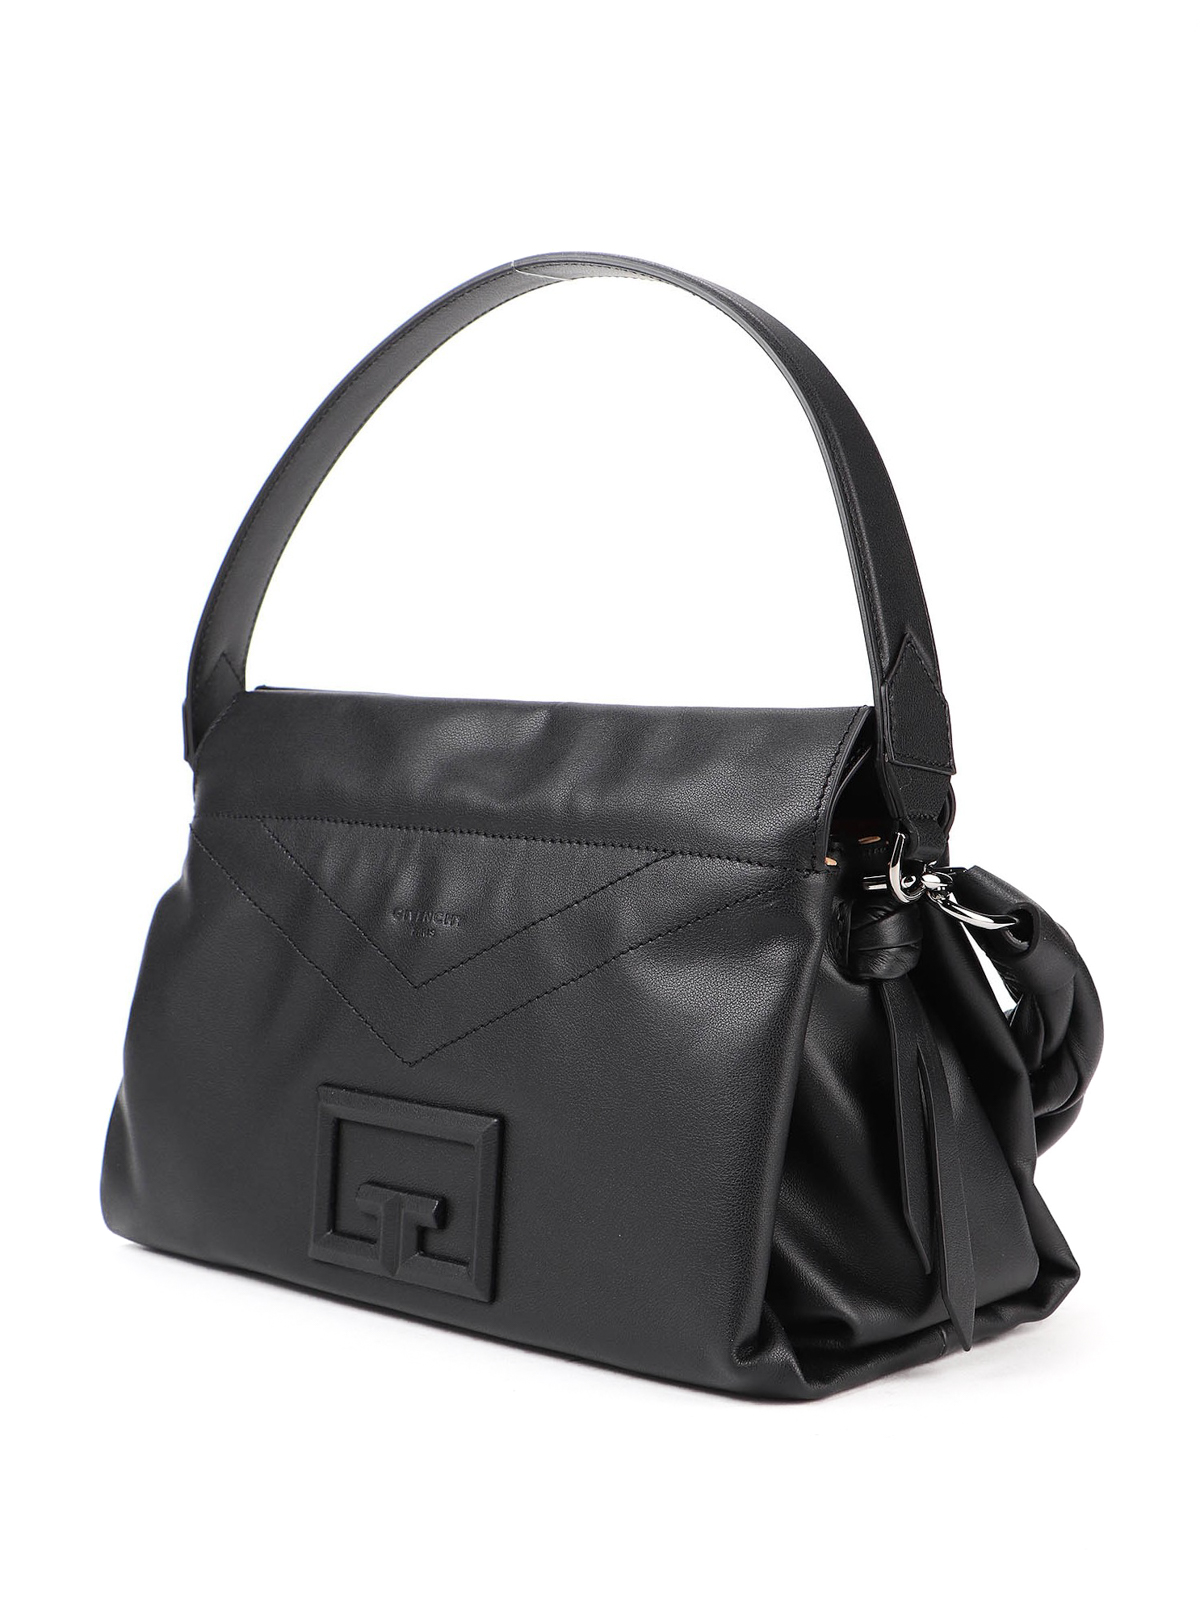 Shoulder bags Givenchy - ID93 medium black leather bag - BB50ENB0VT001